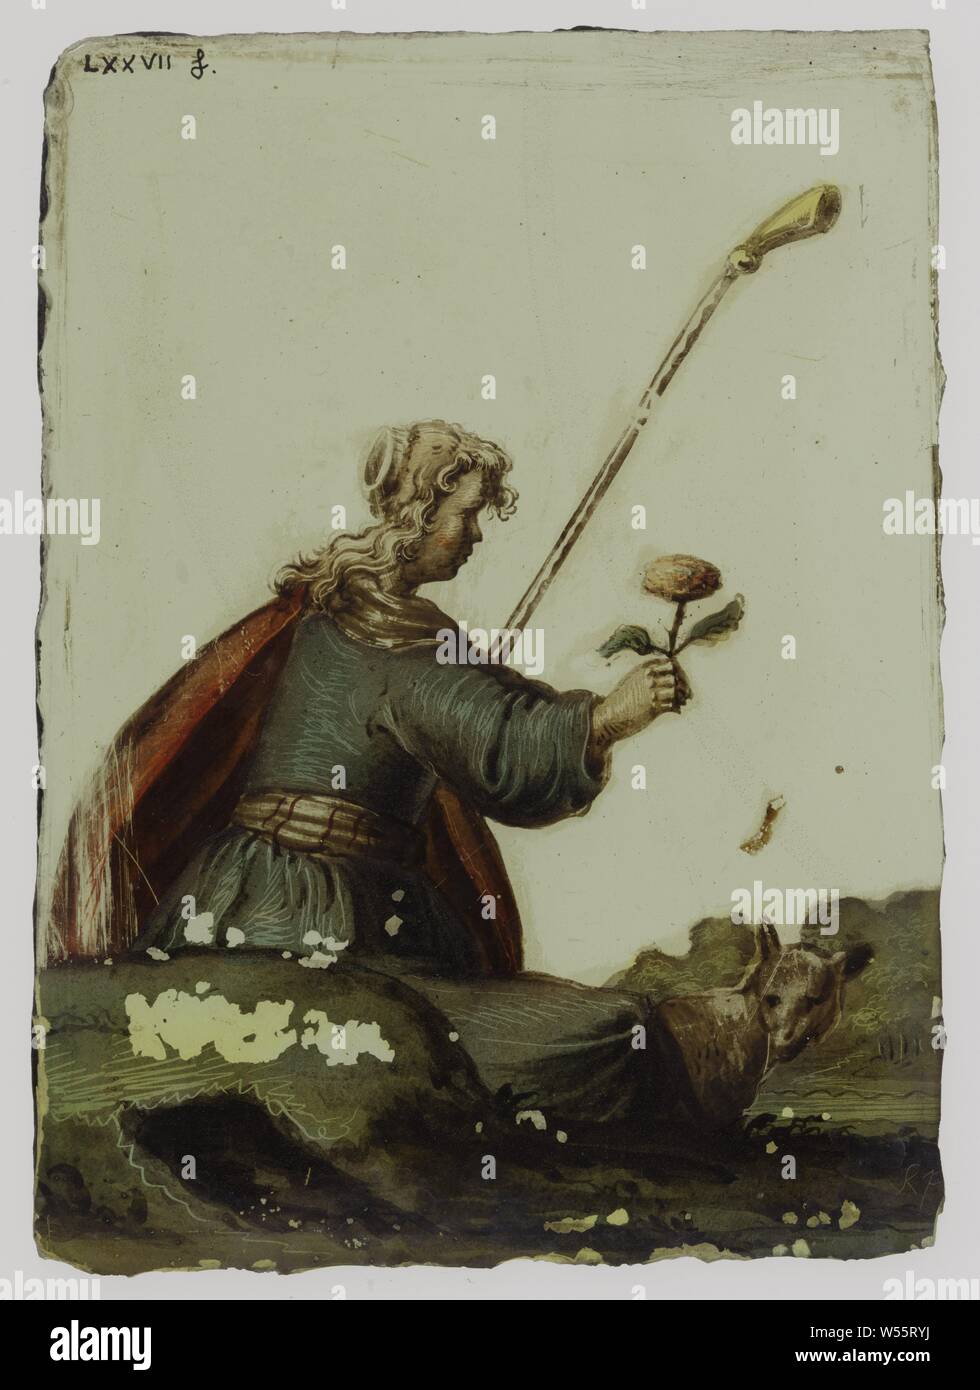 ancient shepherds staff